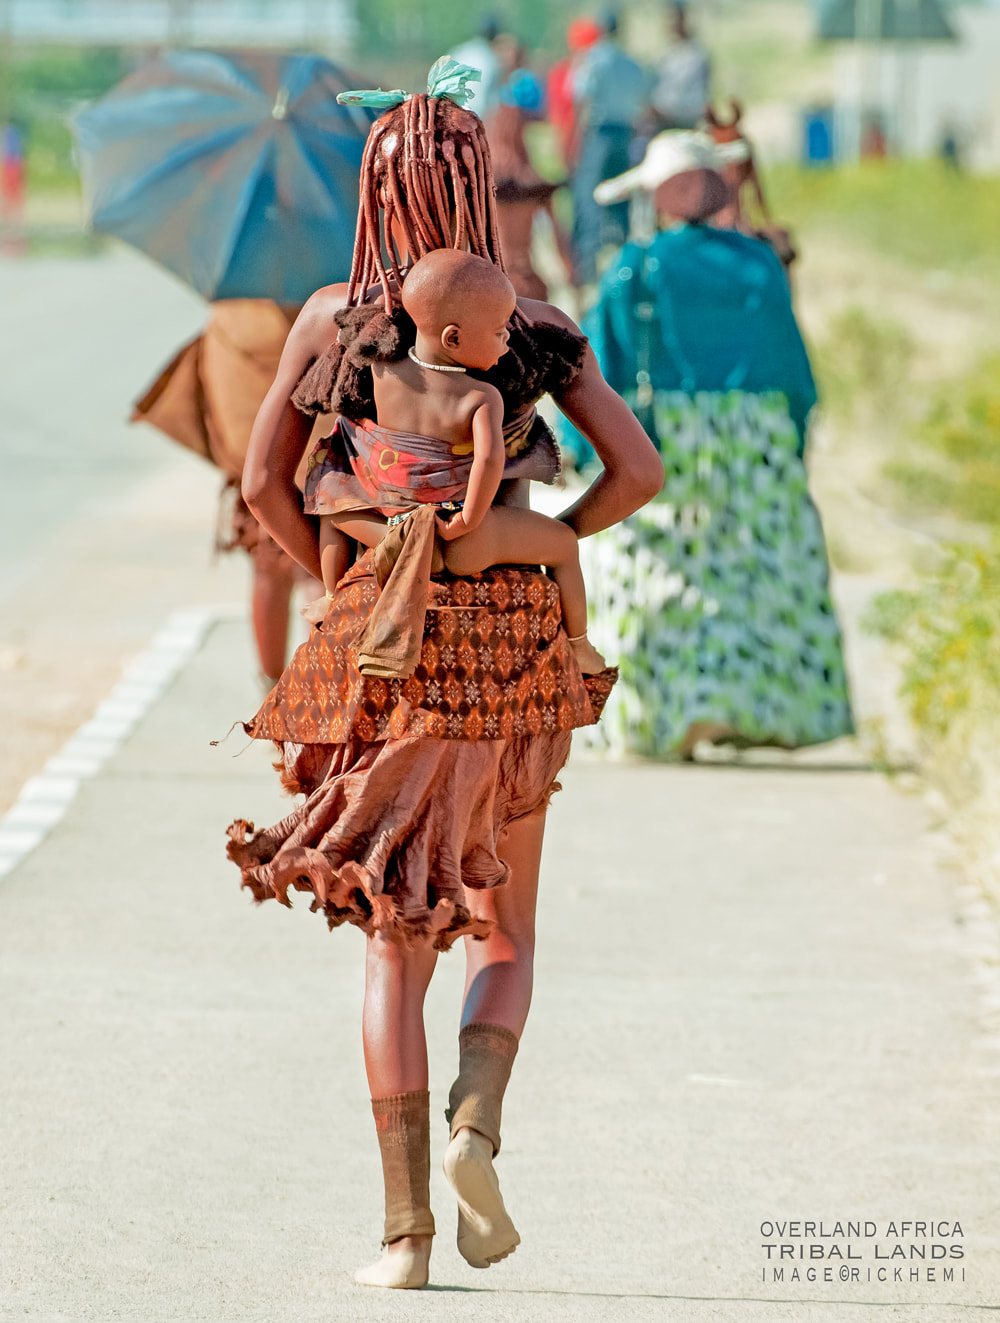 solo overland Africa, tribal lands, street DSLR image by Rick Hemi